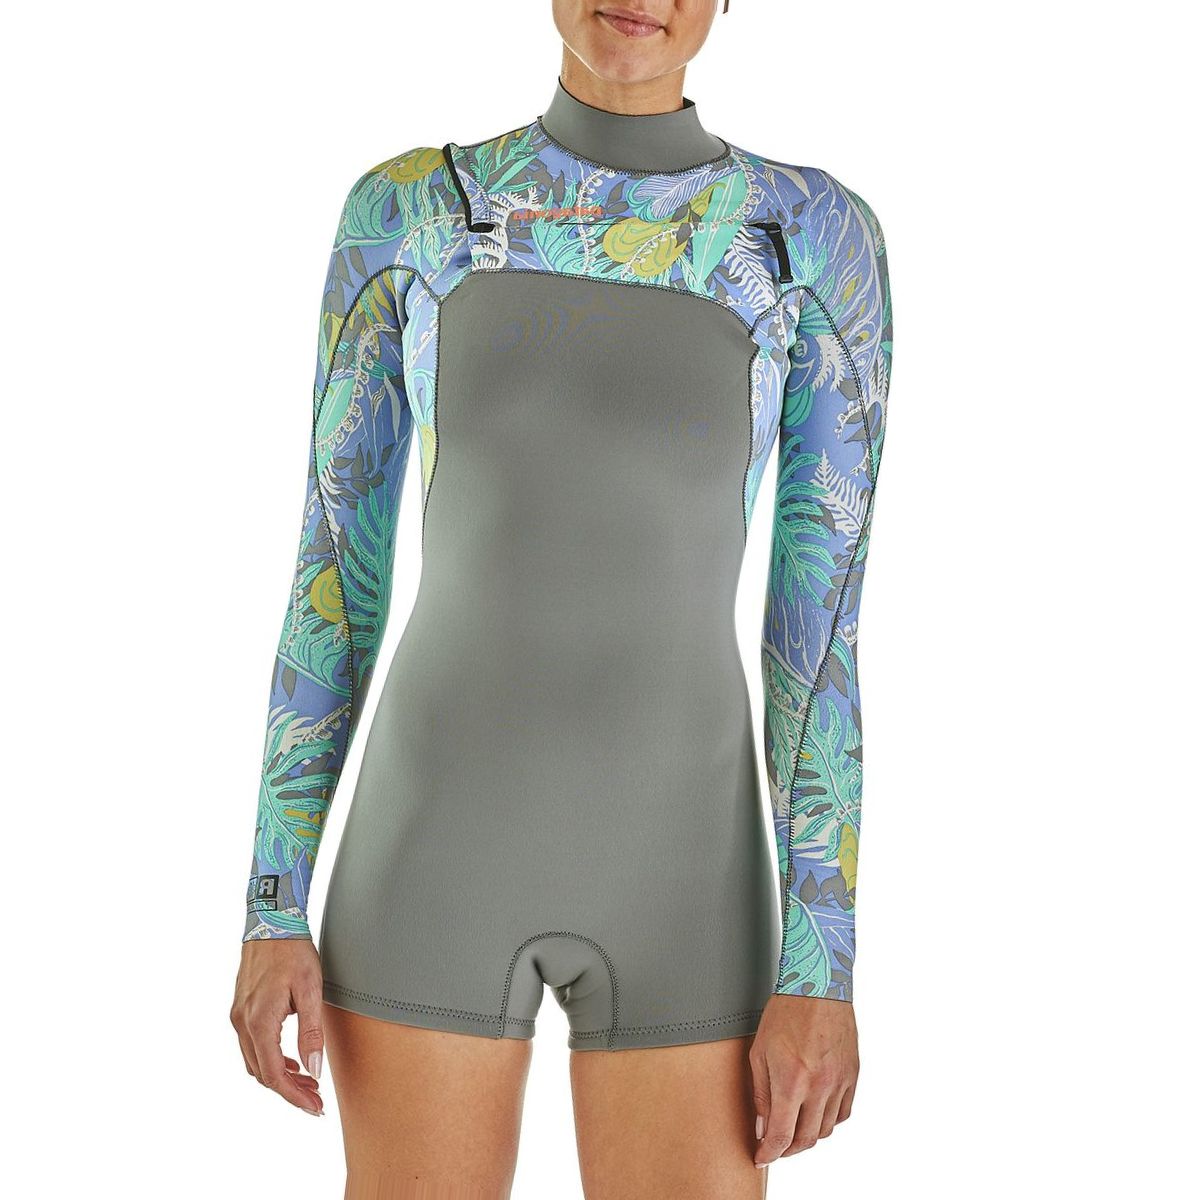 Surfit Girls Front Facing Short Sleeve Wetsuit 